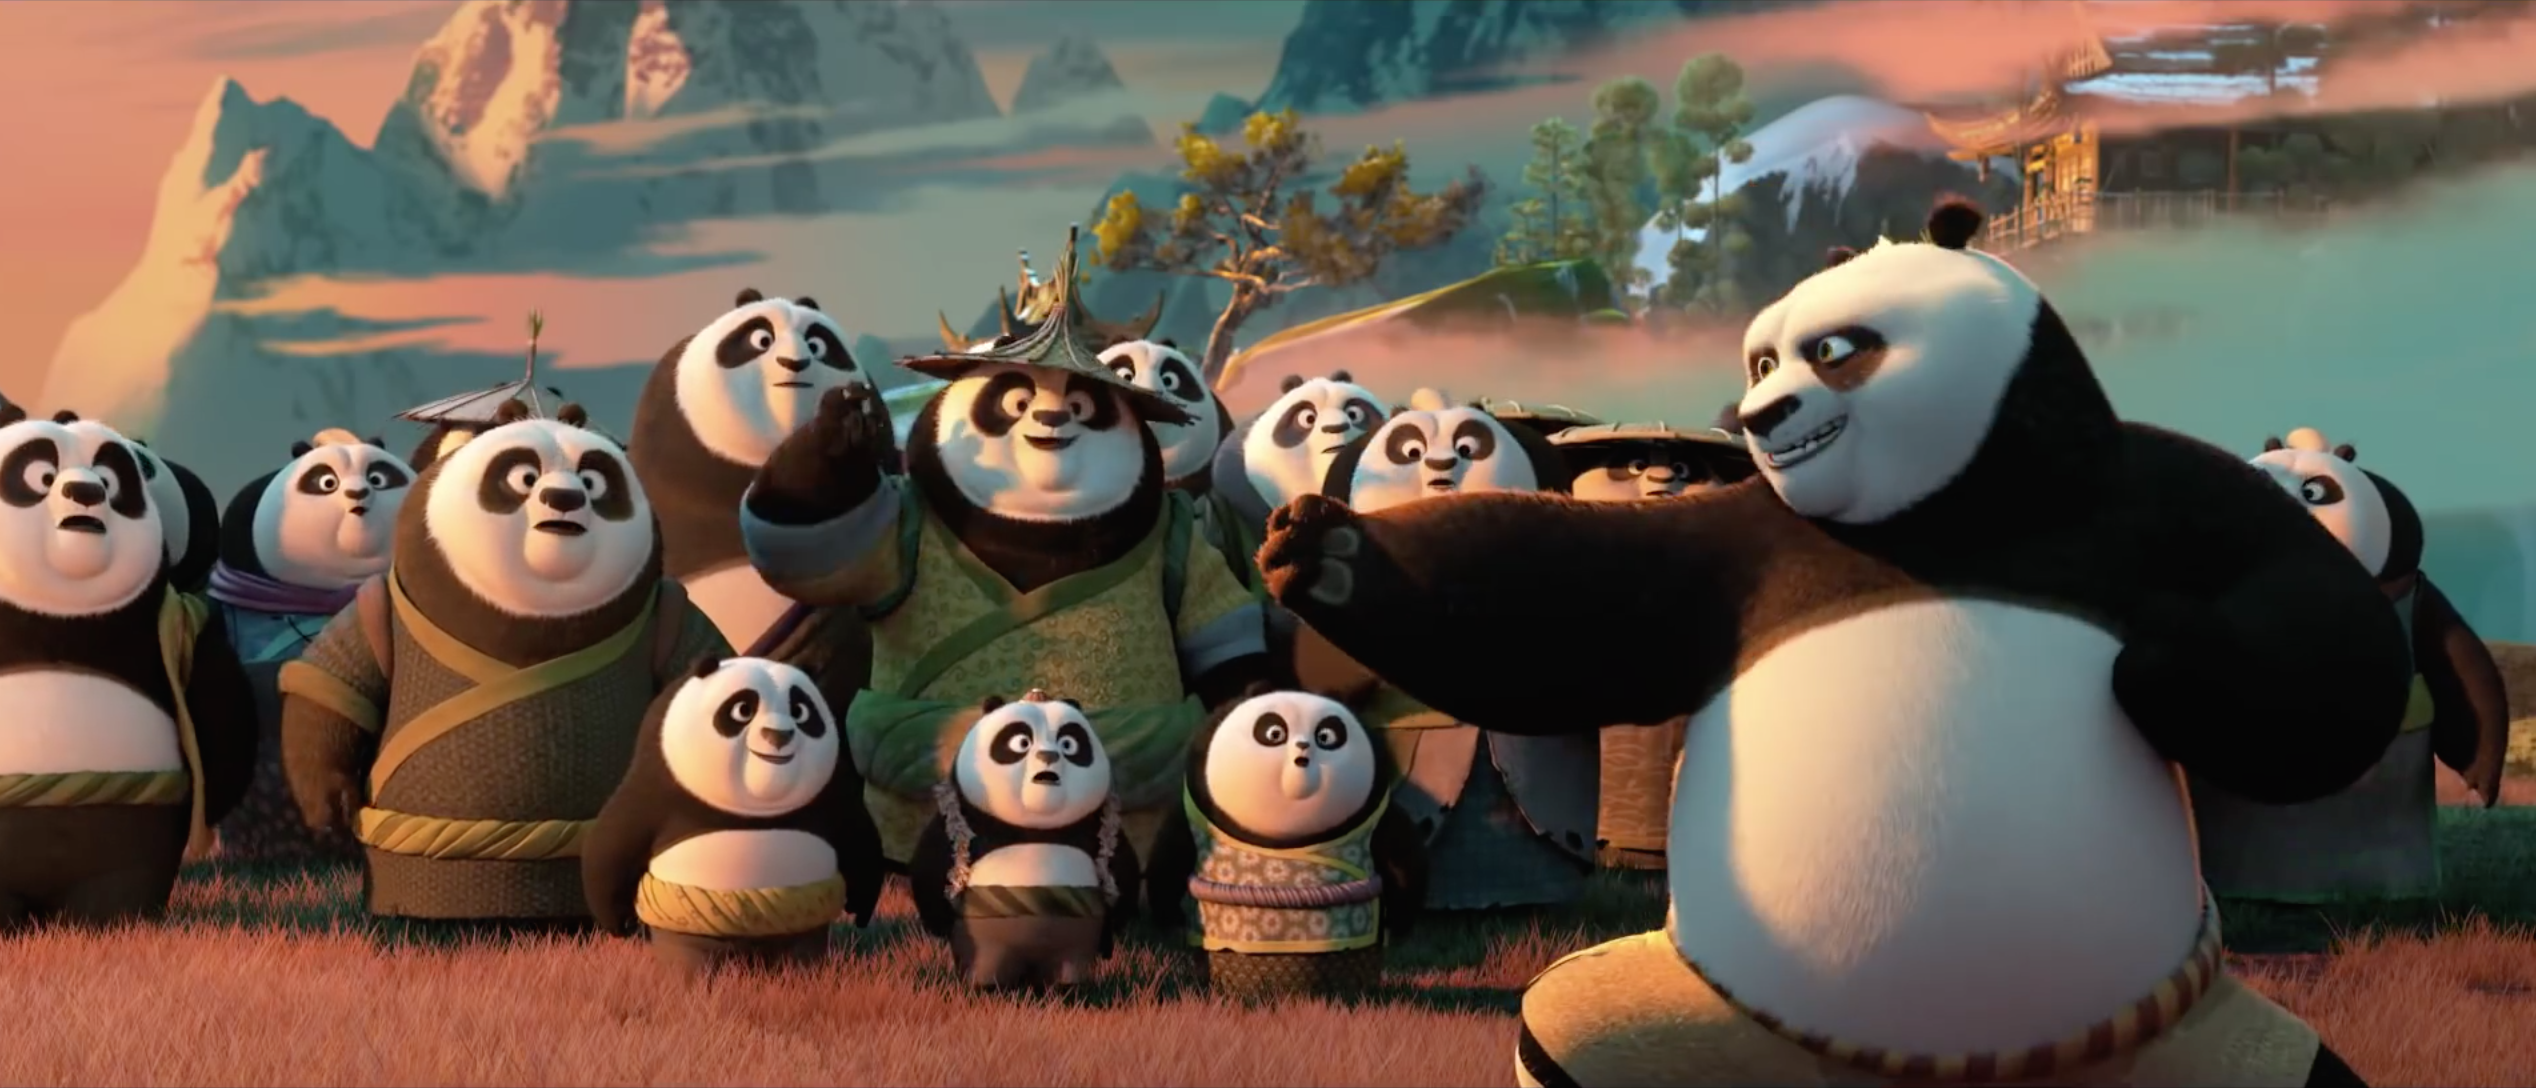 Kung Fu Panda 3: trama, durata e doppiatori del film